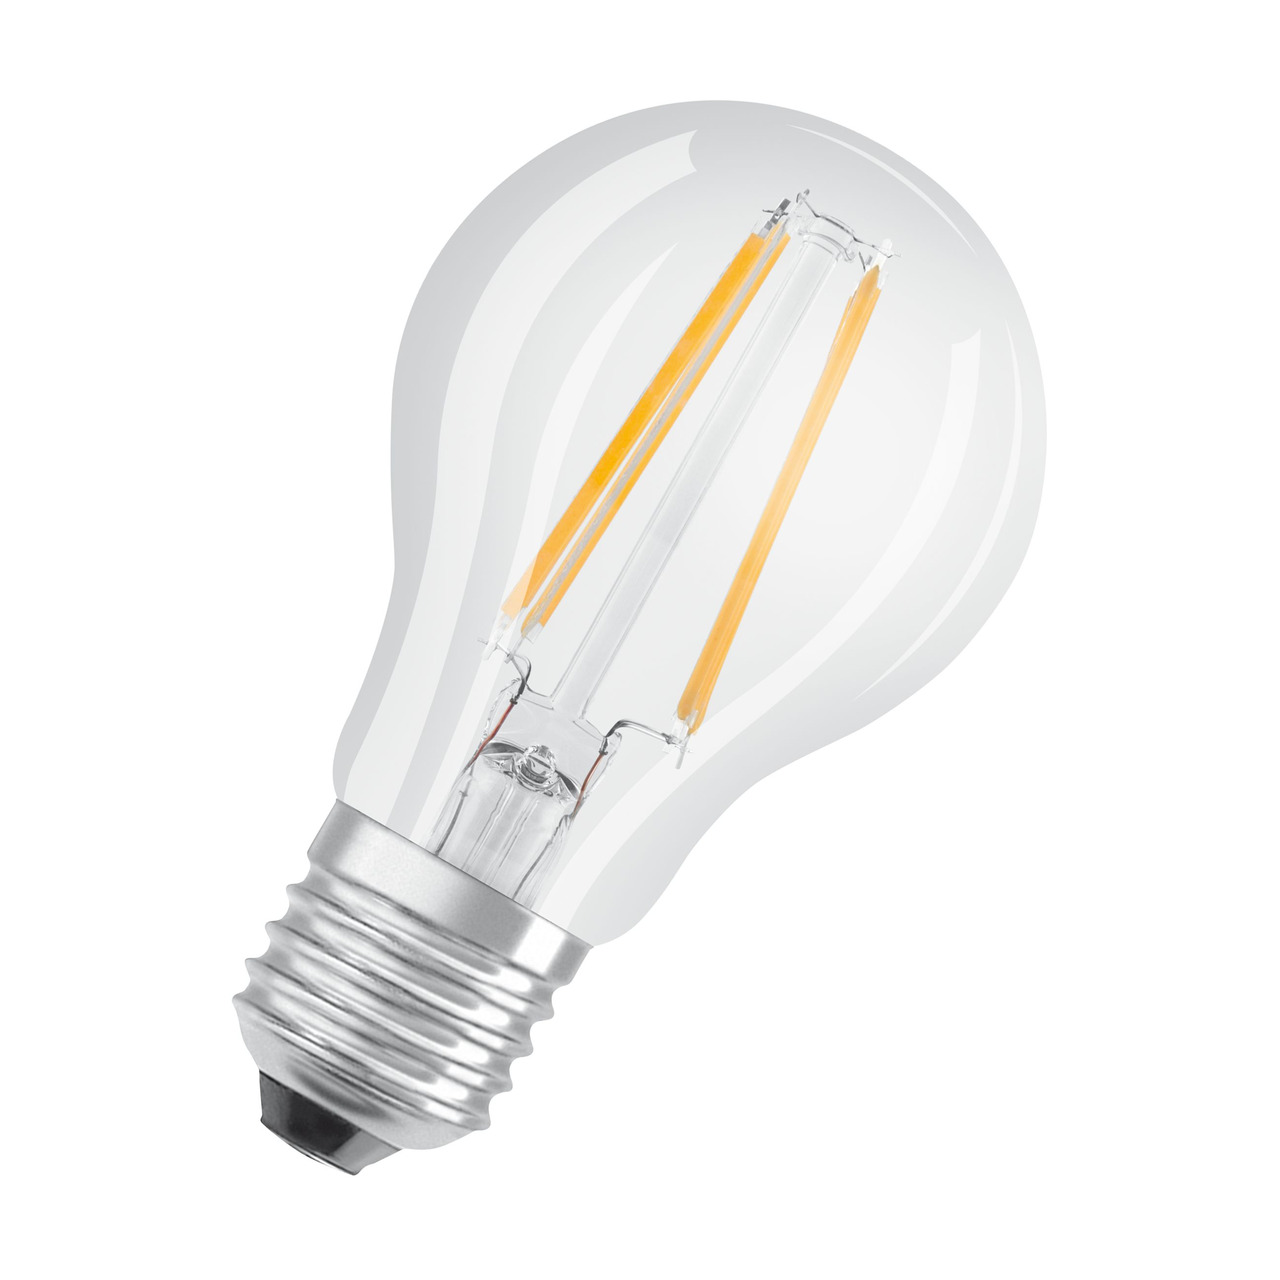 OSRAM 7-W-LED-Lampe A60- E27- 806 lm- warmweiss - neutralweiss- klar